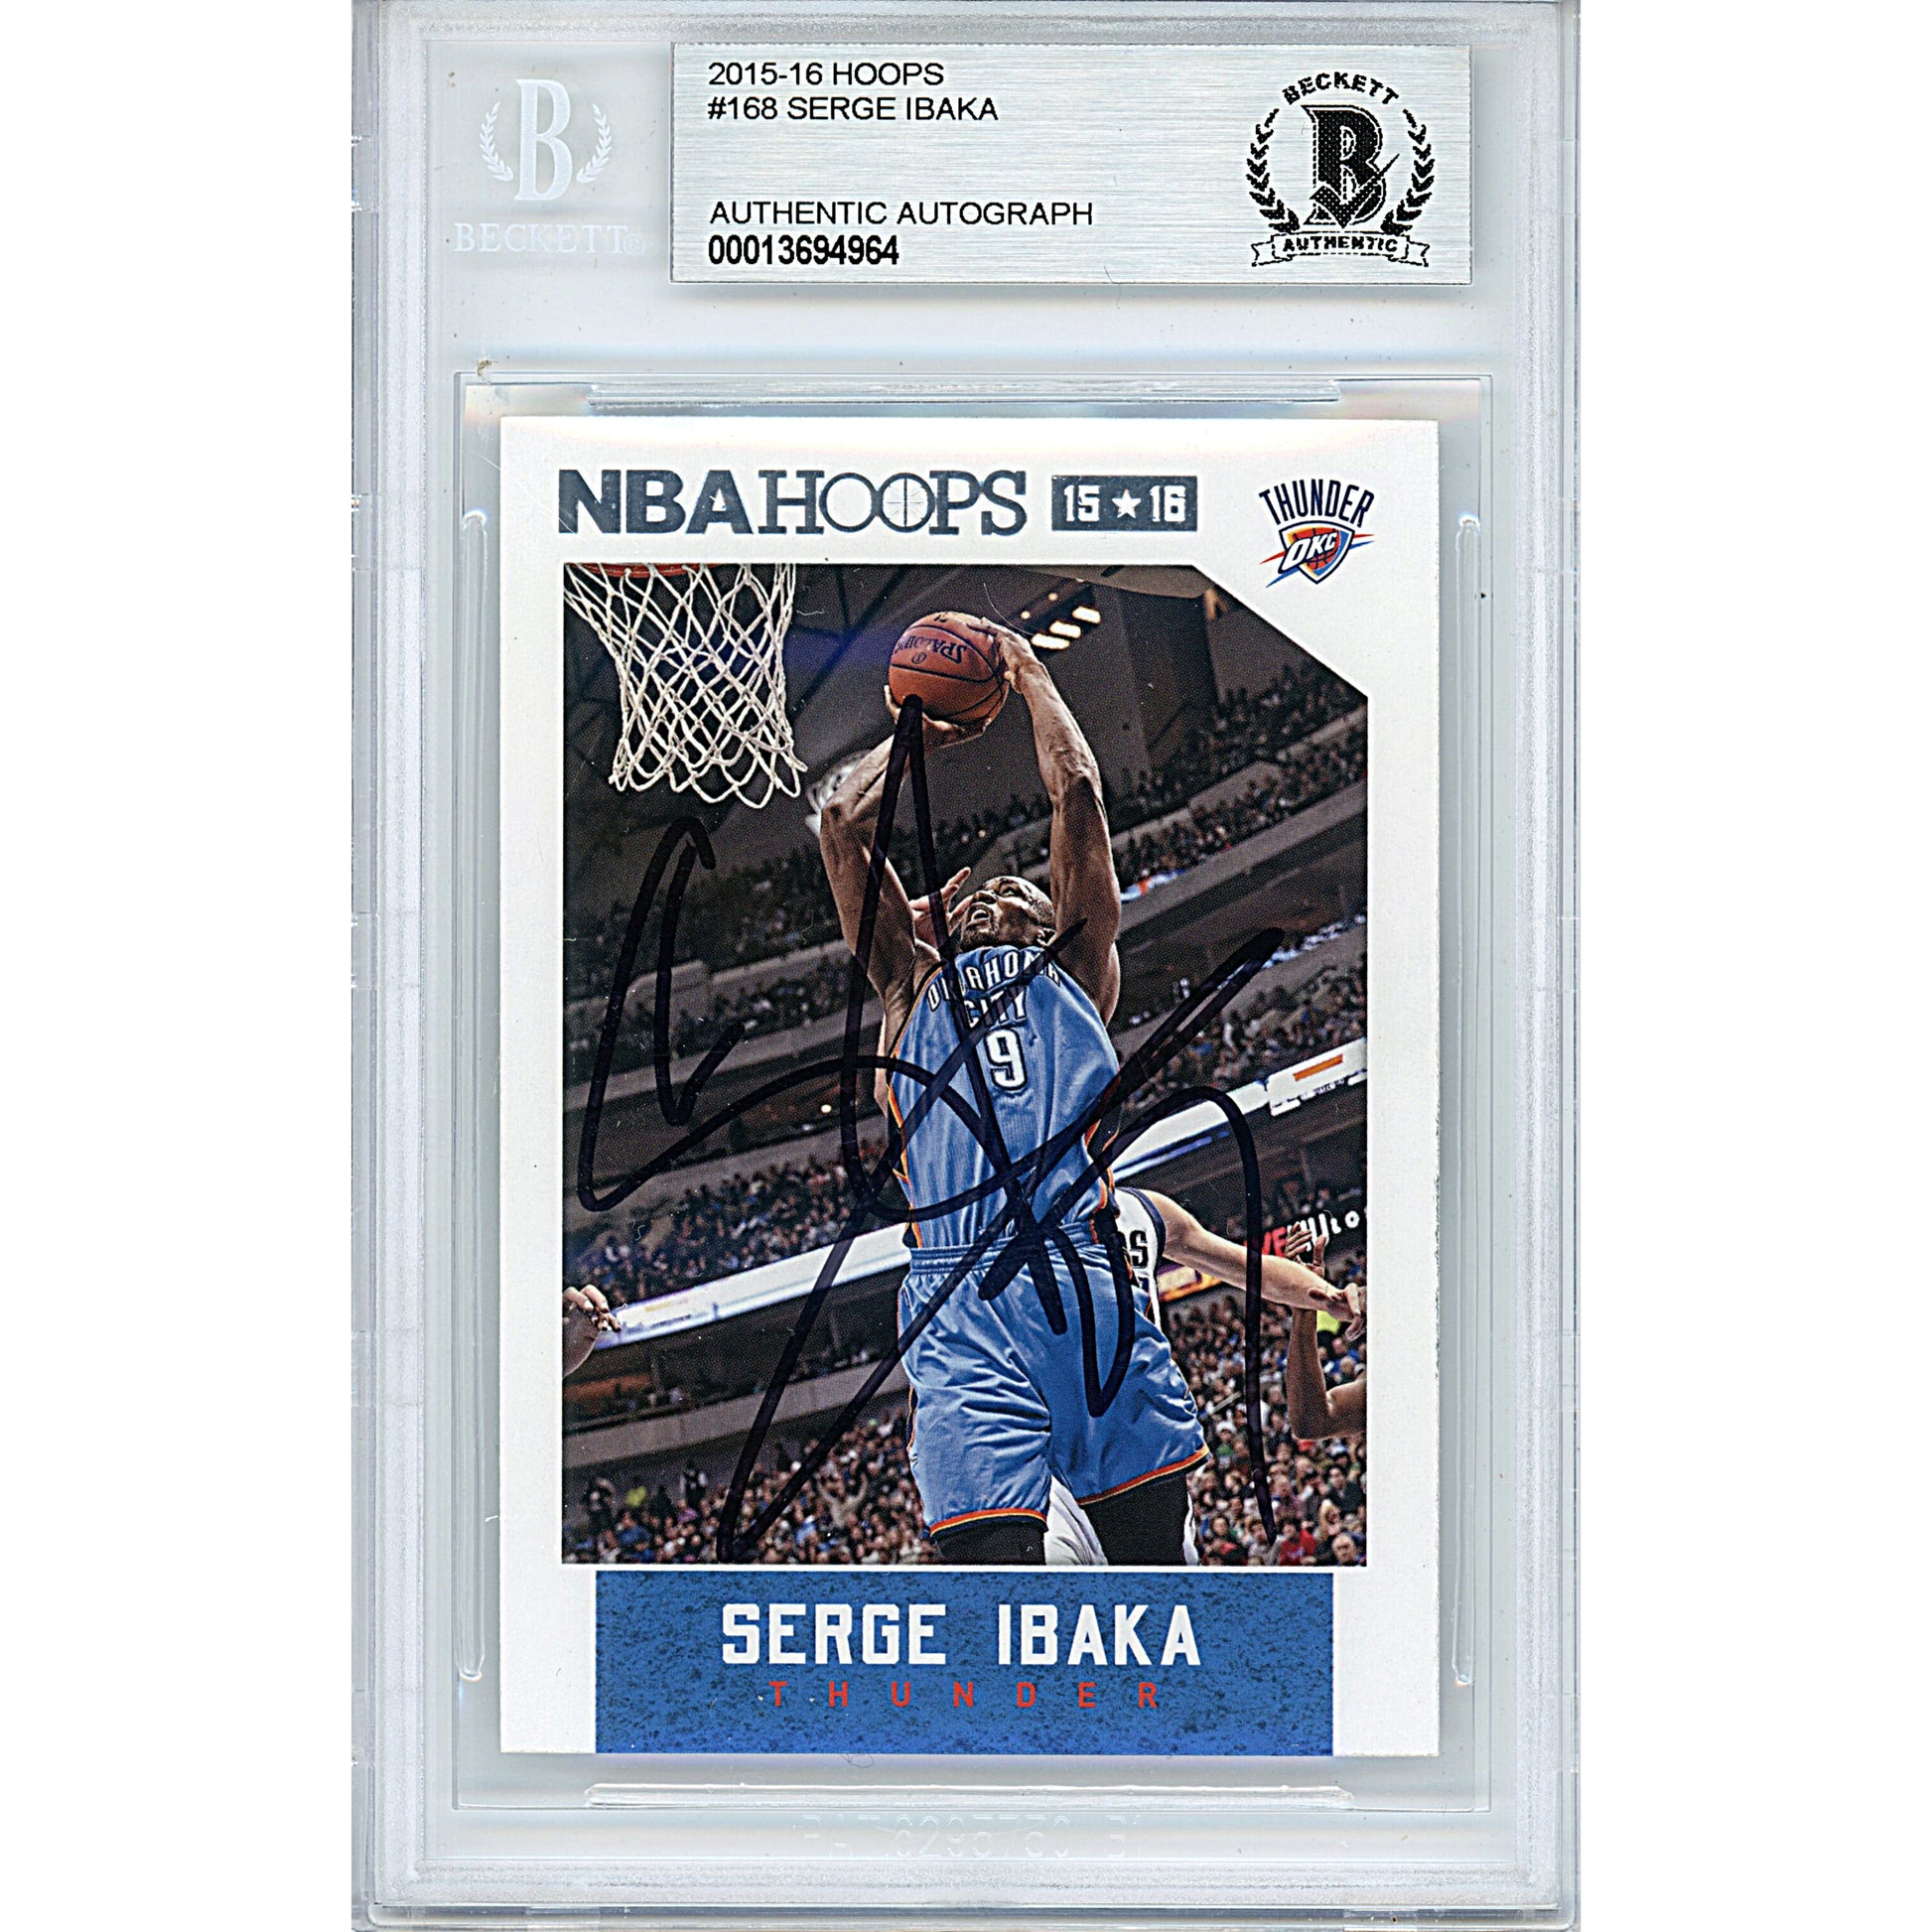 Basketballs- Autographed- Serge Ibaka Signed Oklahoma City Thunder 2015-2016 NBA Hoops Basketball Card Beckett BAS Slabbed 00013694964 - 101